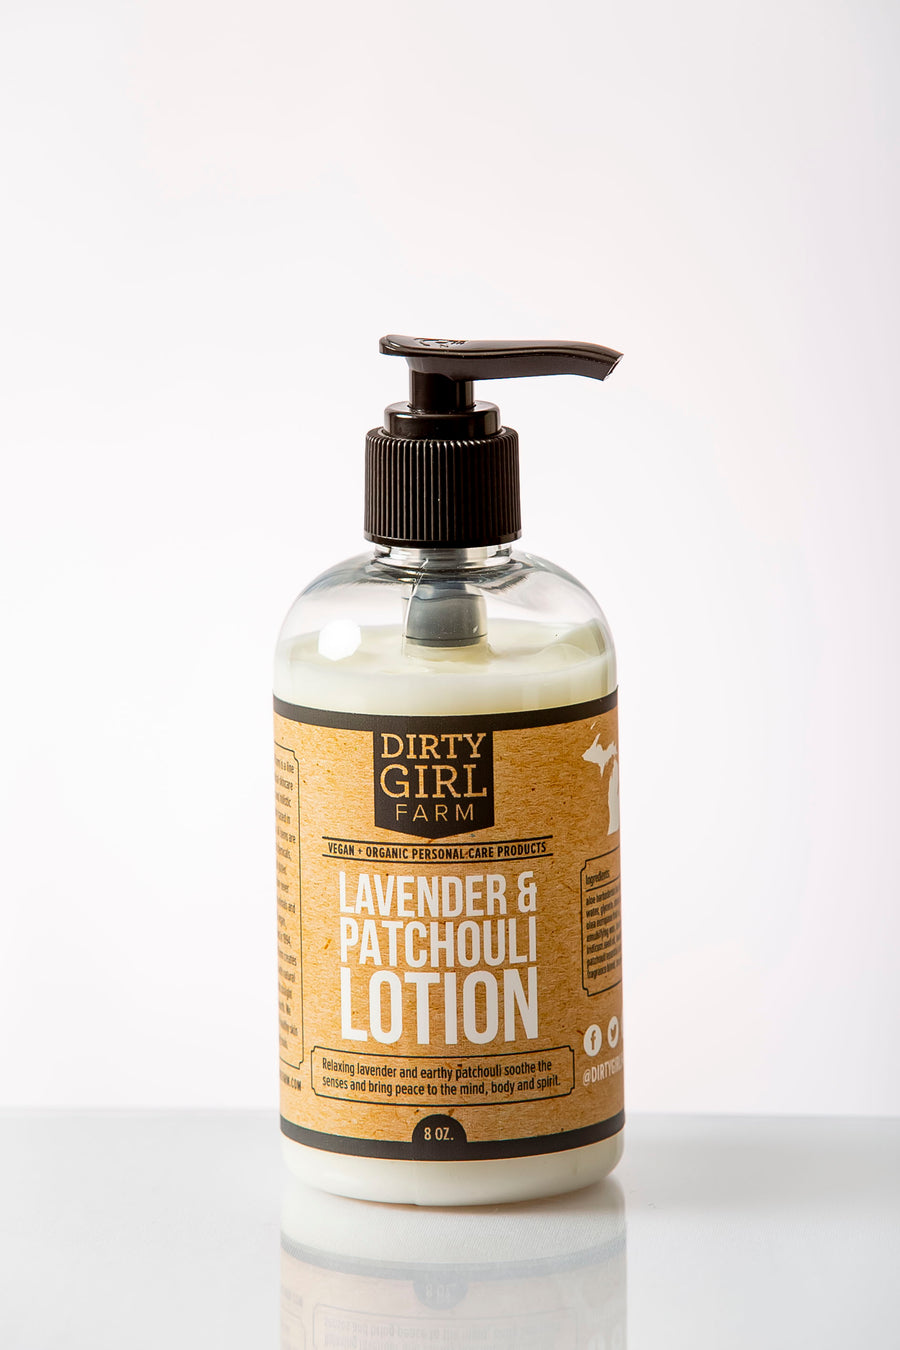 Dirty Girl Farm Lavender & Patchouli Lotion